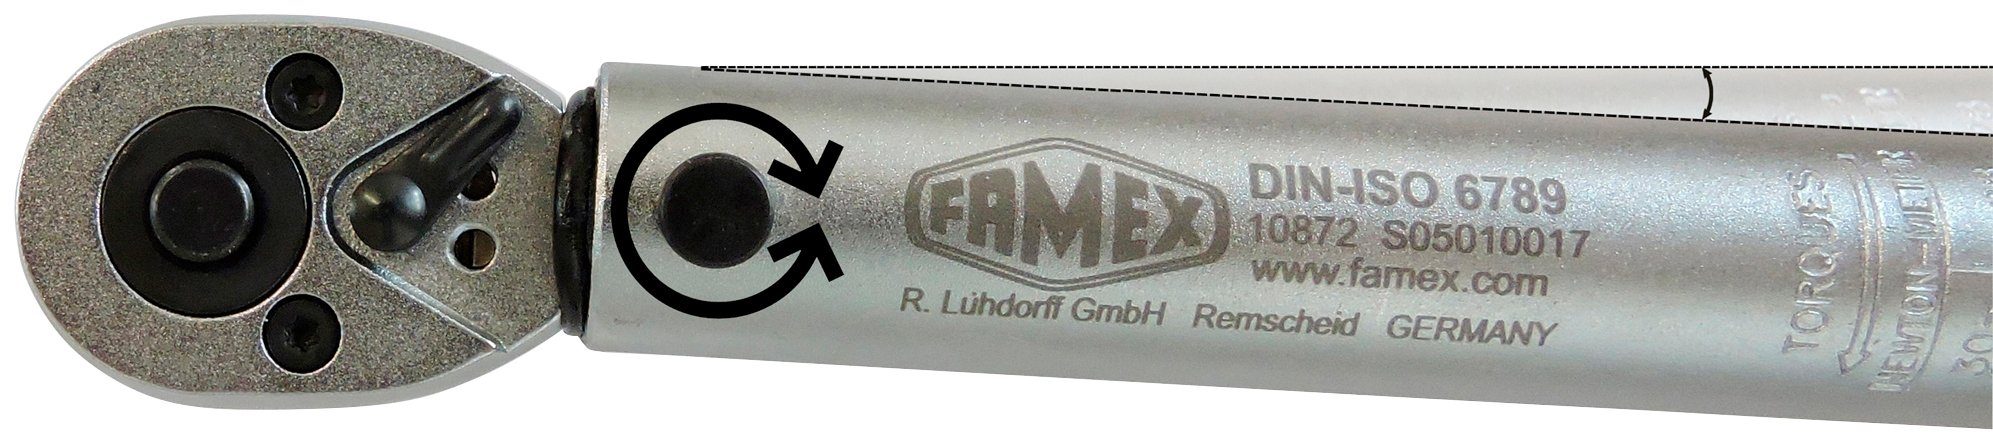 FAMEX Drehmomentschlüssel R+L Pro